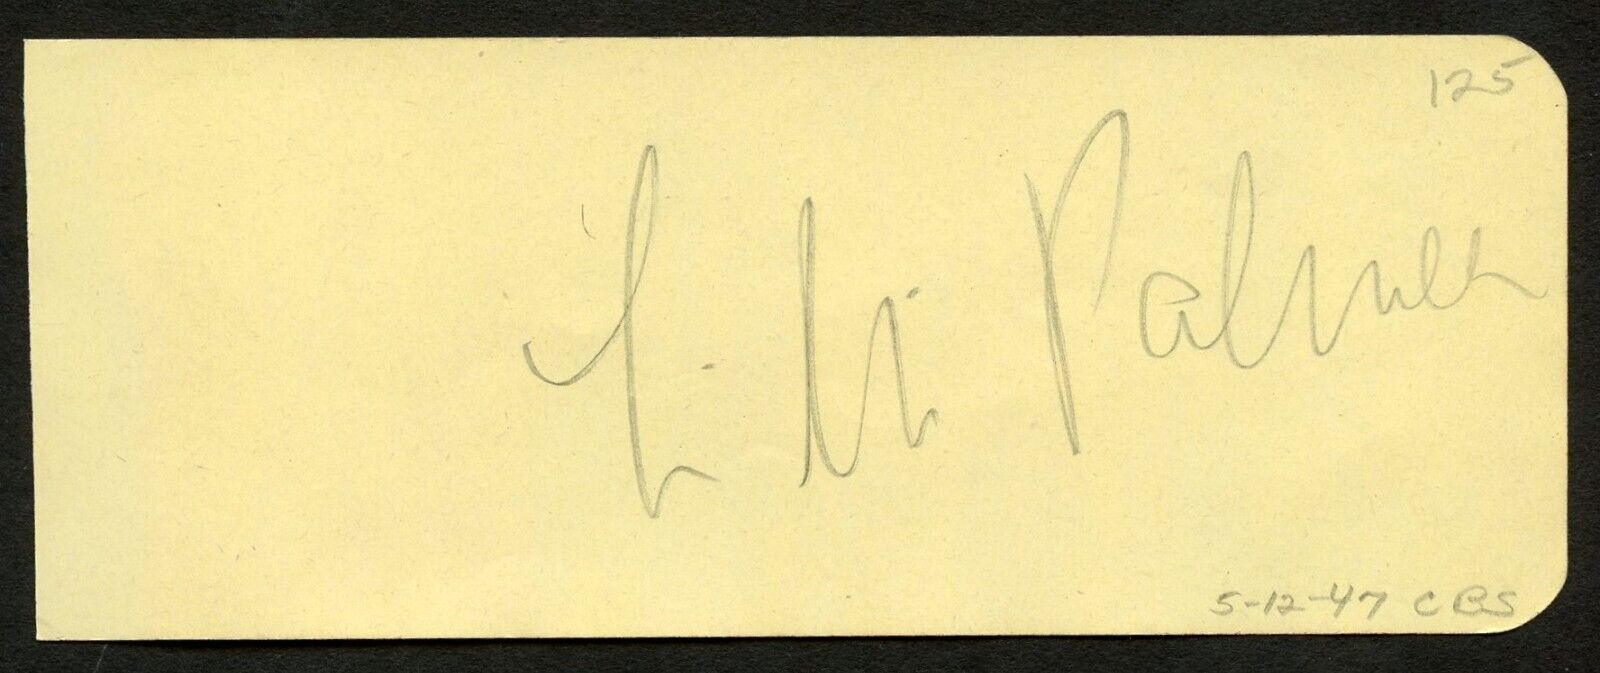 Lilli Palmer d1986 signed 2x5 cut autograph on 5-12-47 at CBS Playhouse LA